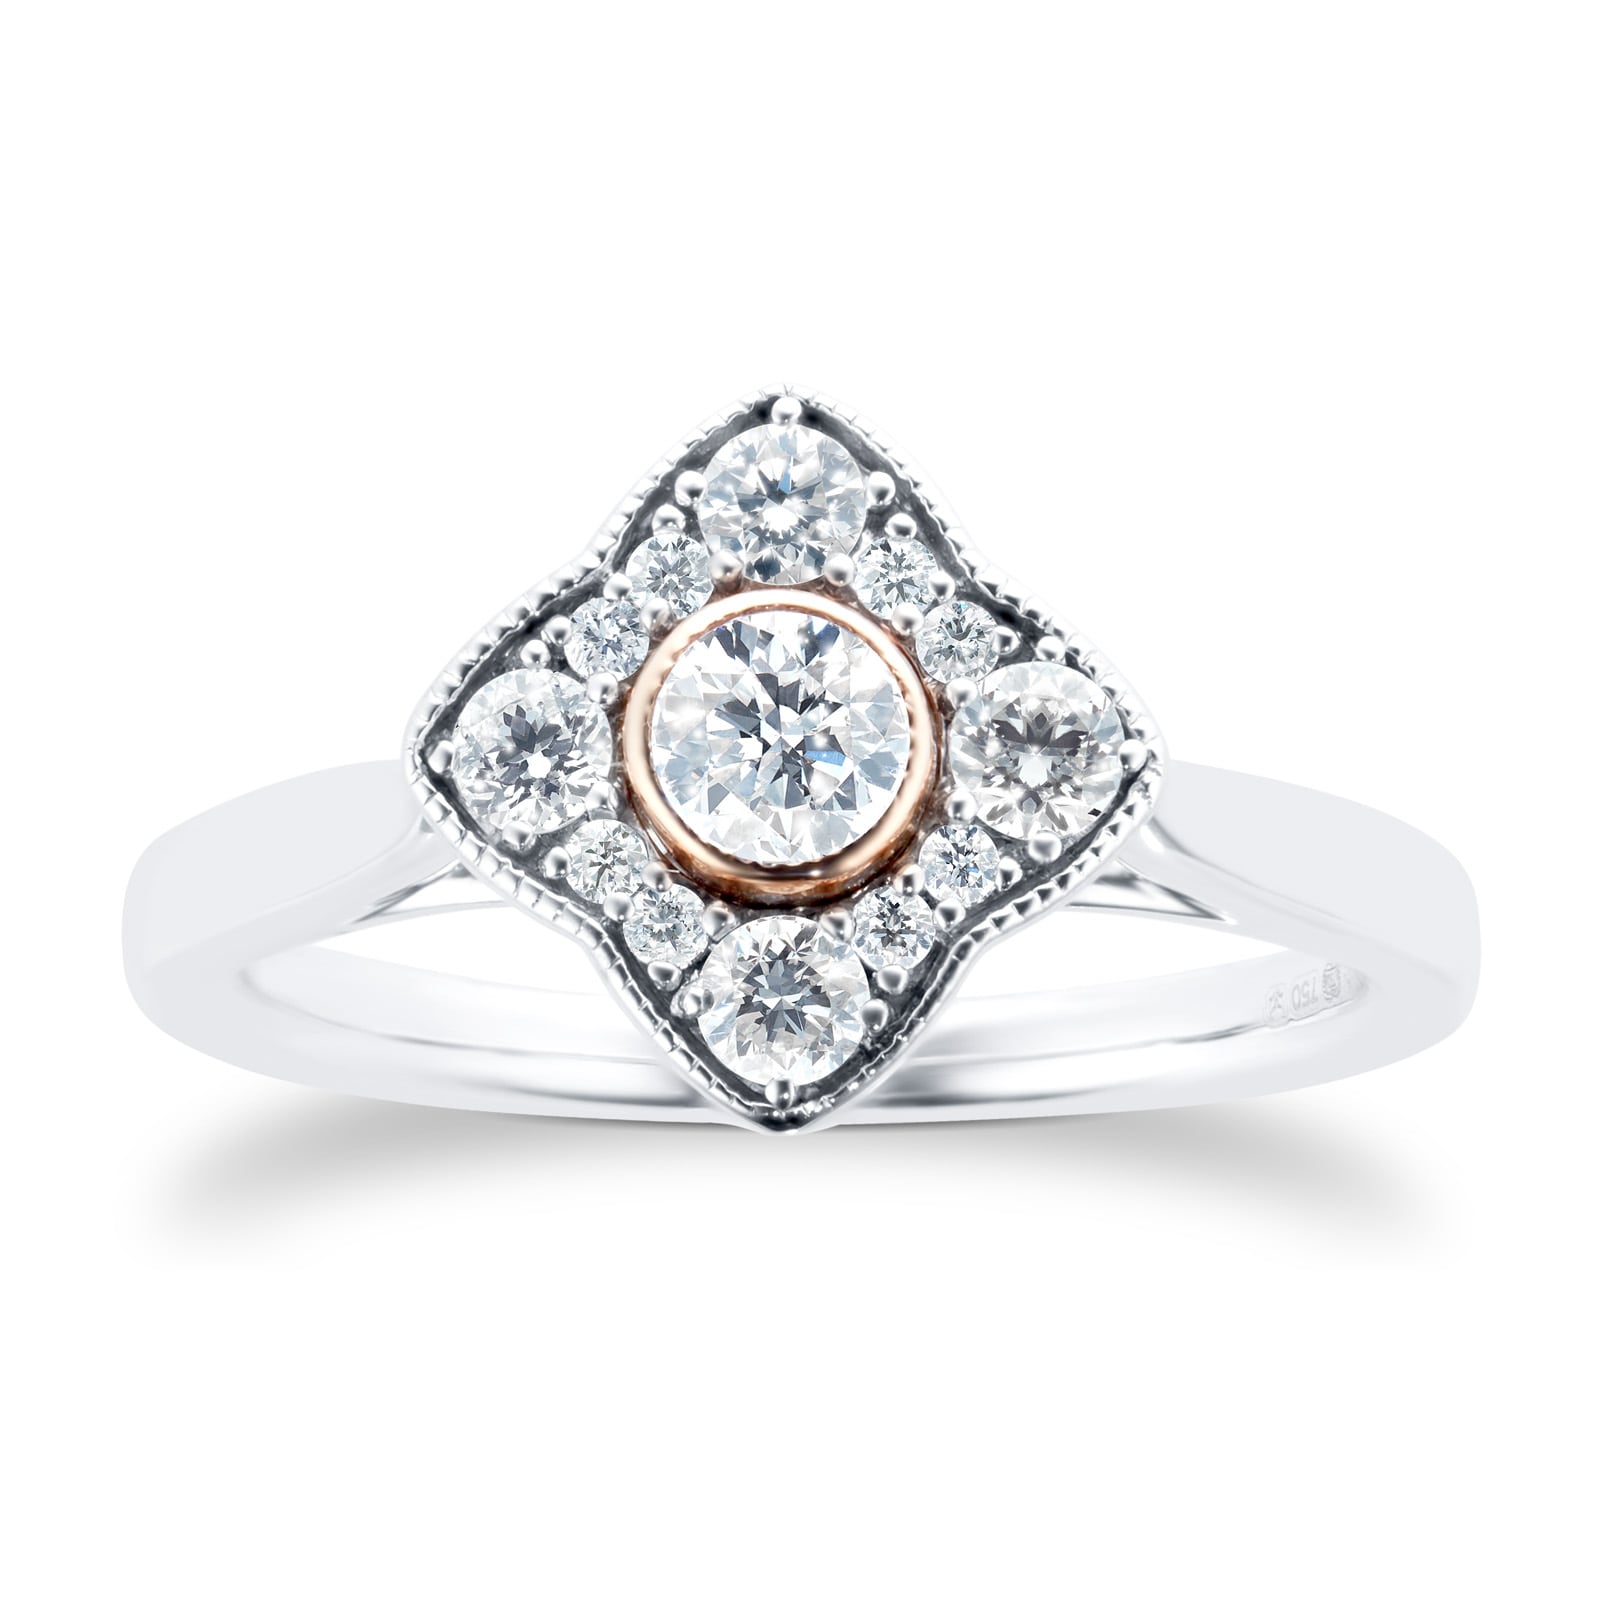 18 Carat White Gold 0.50 Carat Diamond Cluster Ring With Rose Gold Milgrain - Ring Size N